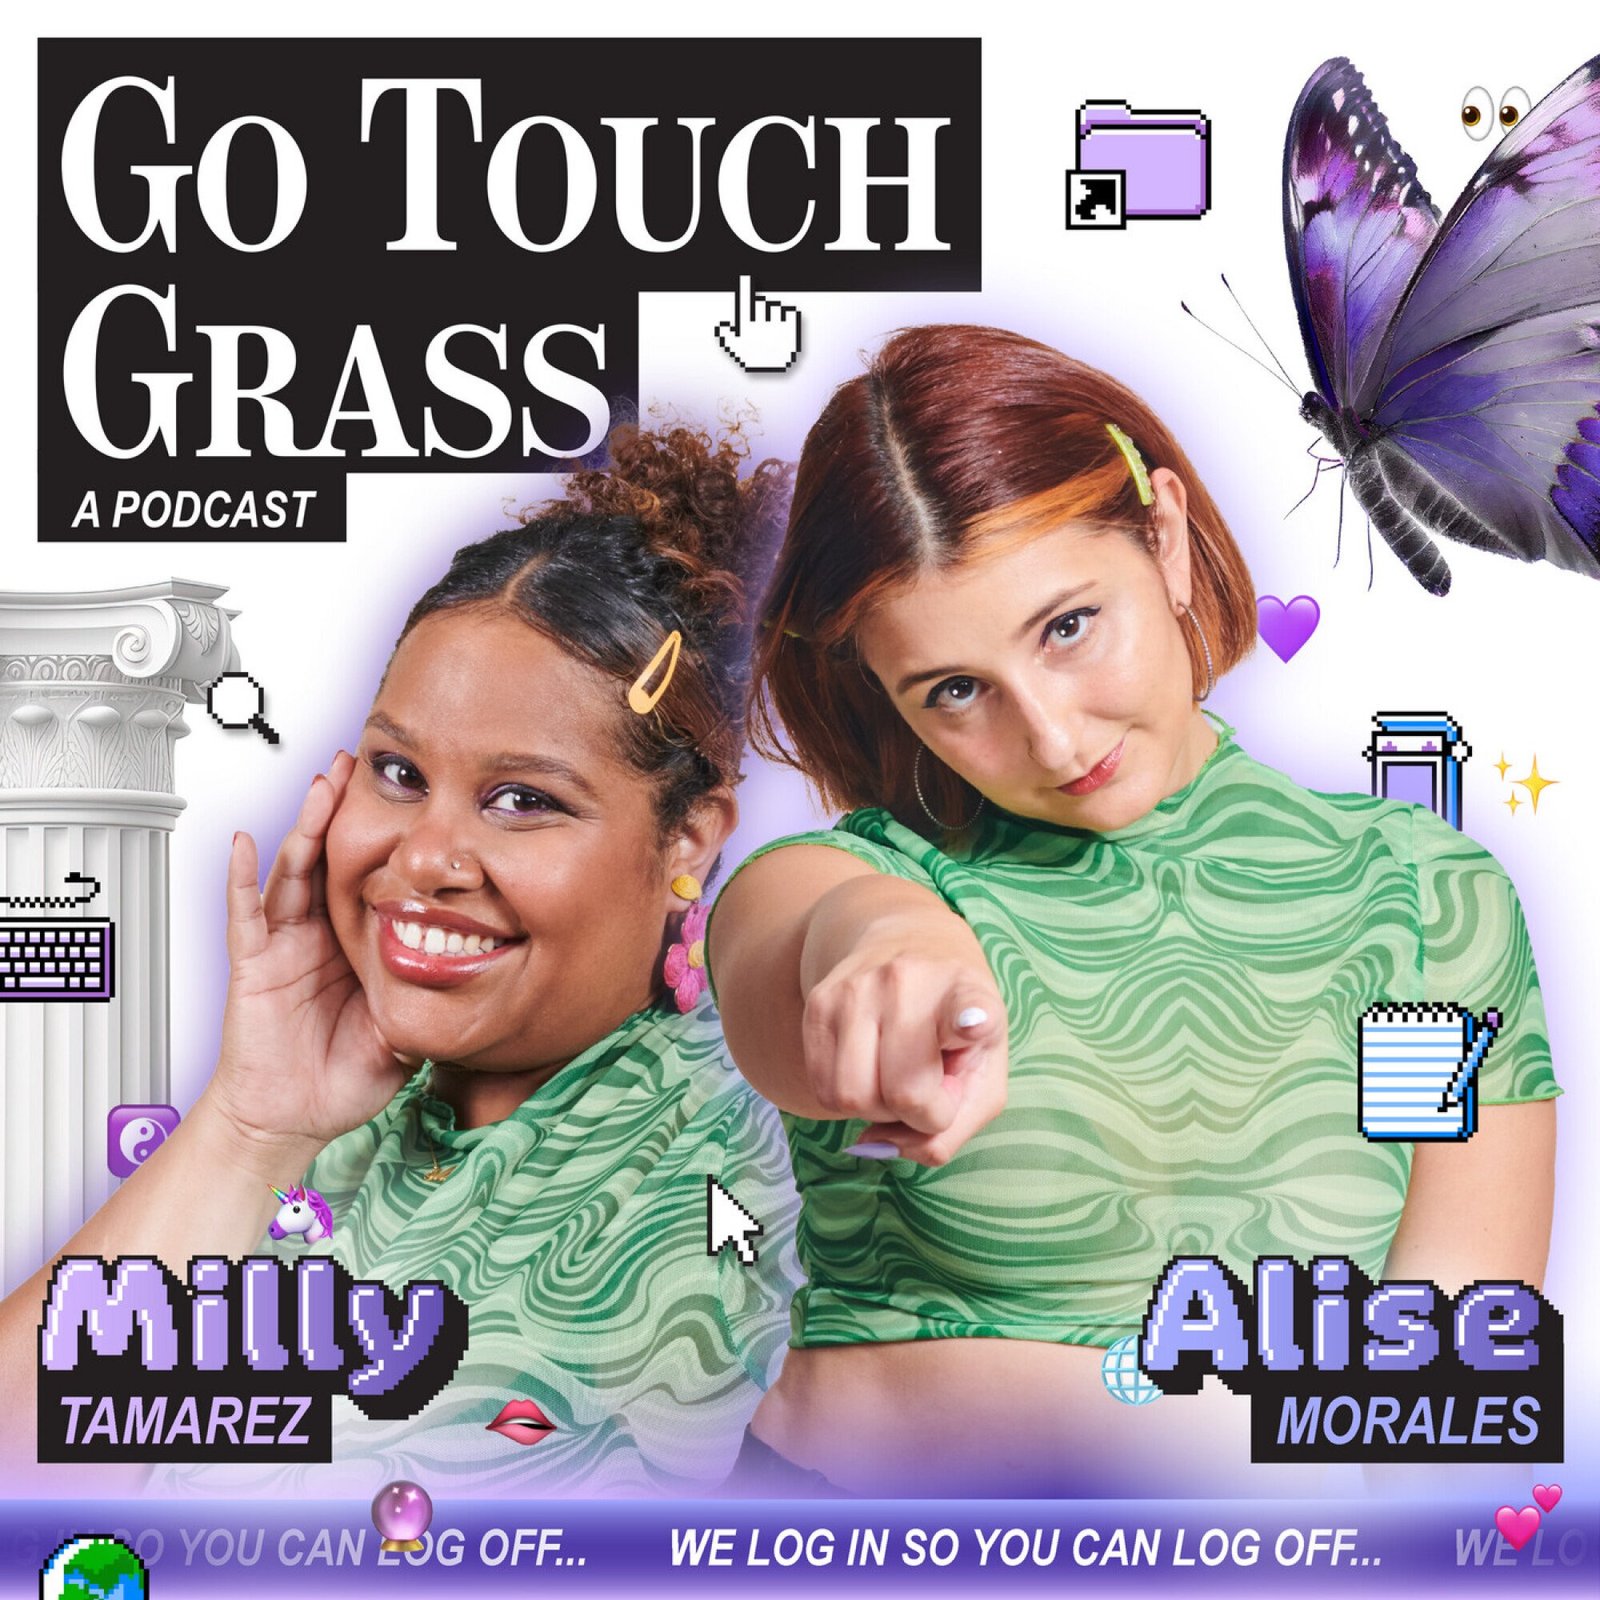 Go Touch Grass podcast logo 